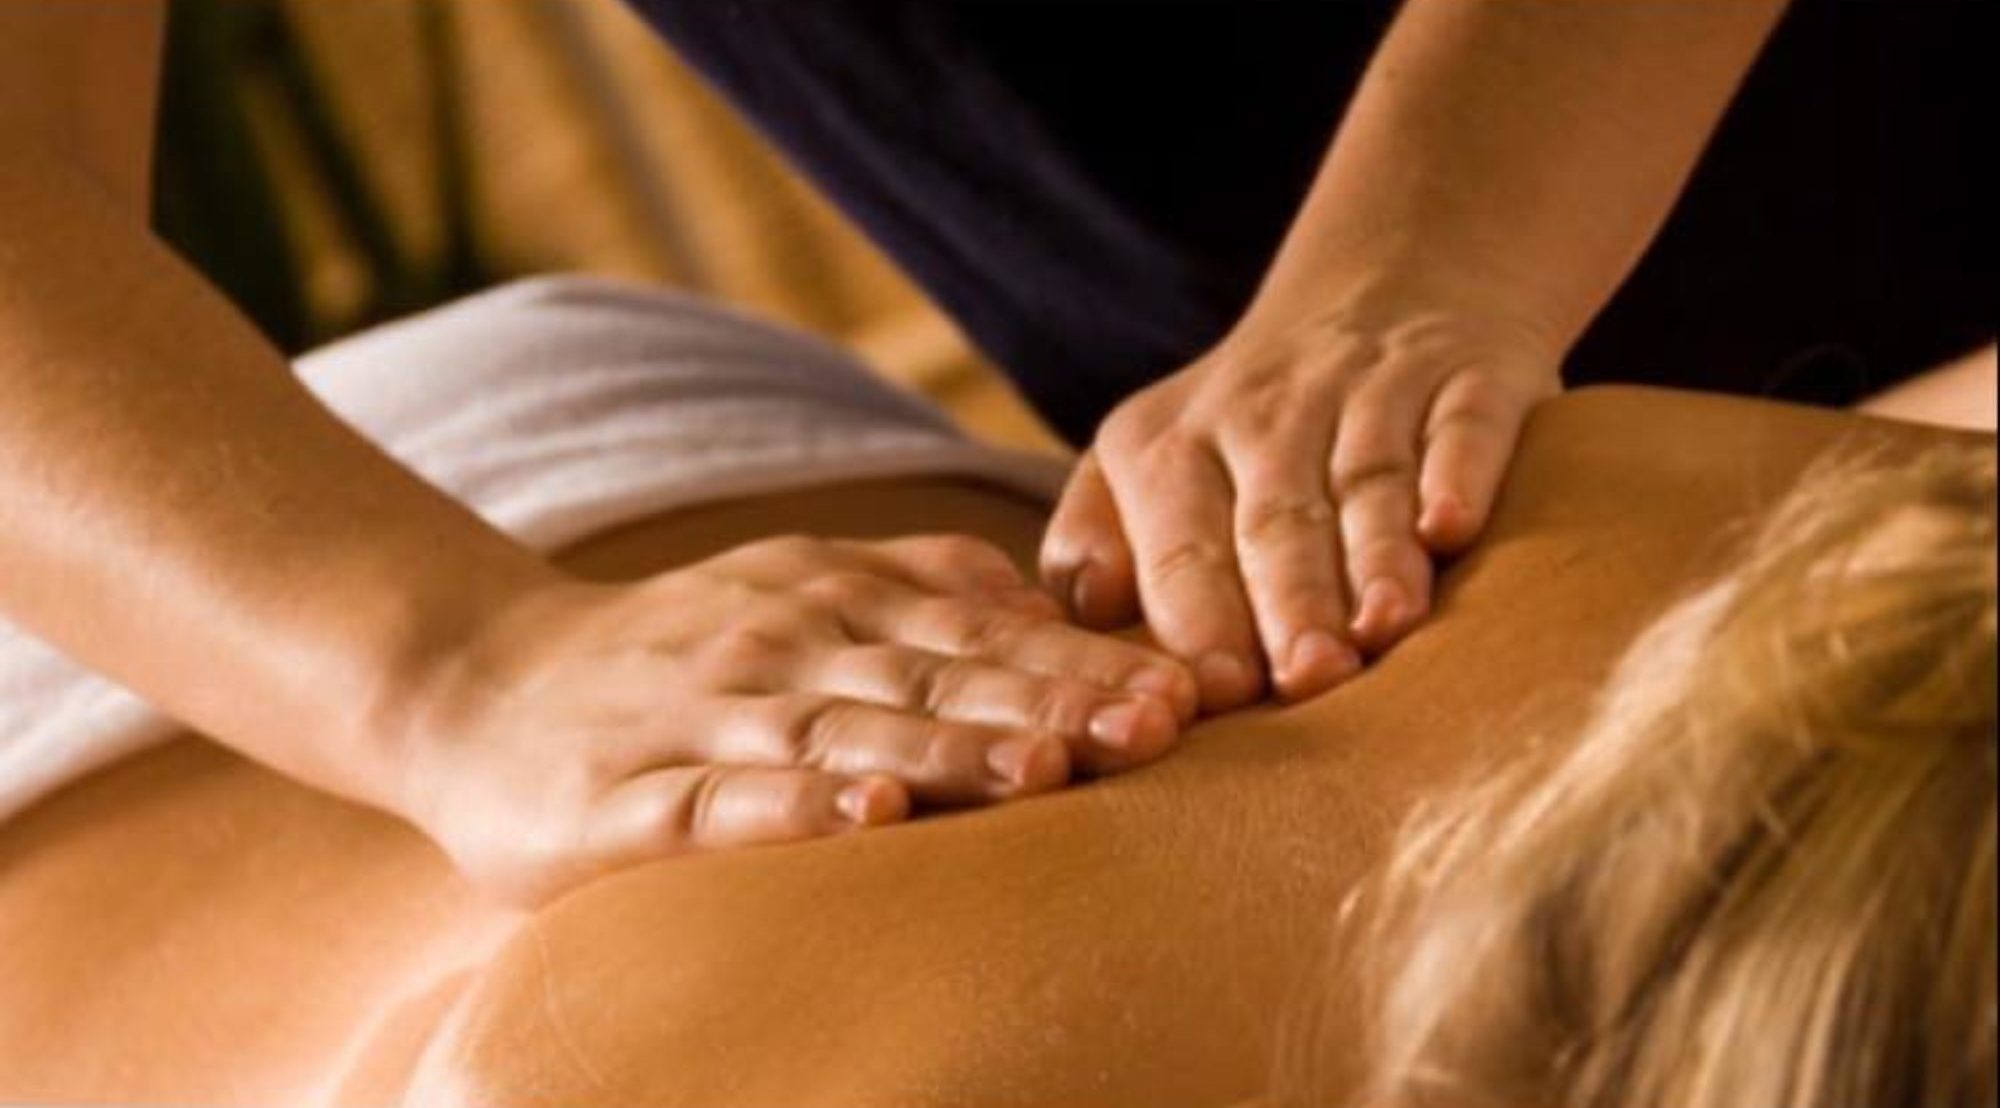 Teen babe gets sensual massage